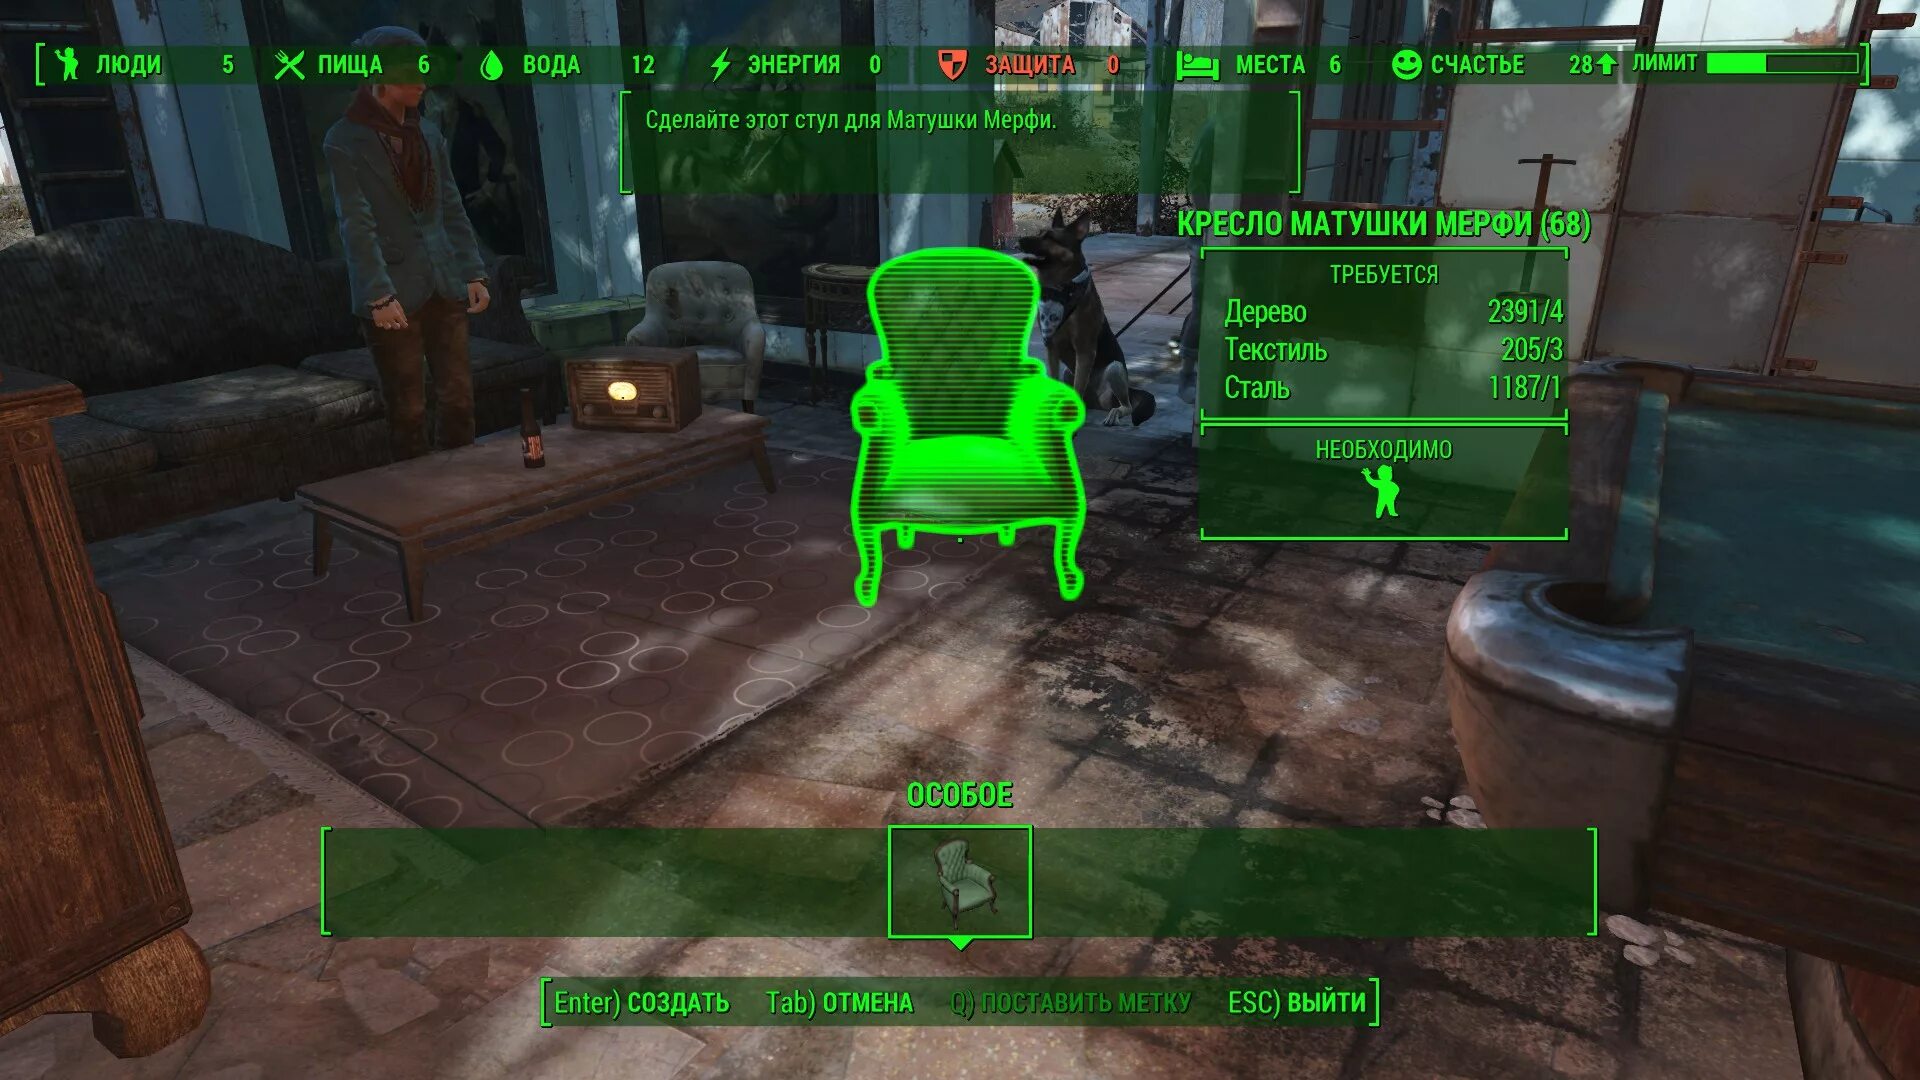 Стул для мерфи fallout 4. Fallout 4 кресло для матушки Мерфи. Фоллаут 4 стул для матушки Мерфи. Стул для матушки Мерфи. Стулья в фоллаут 4.